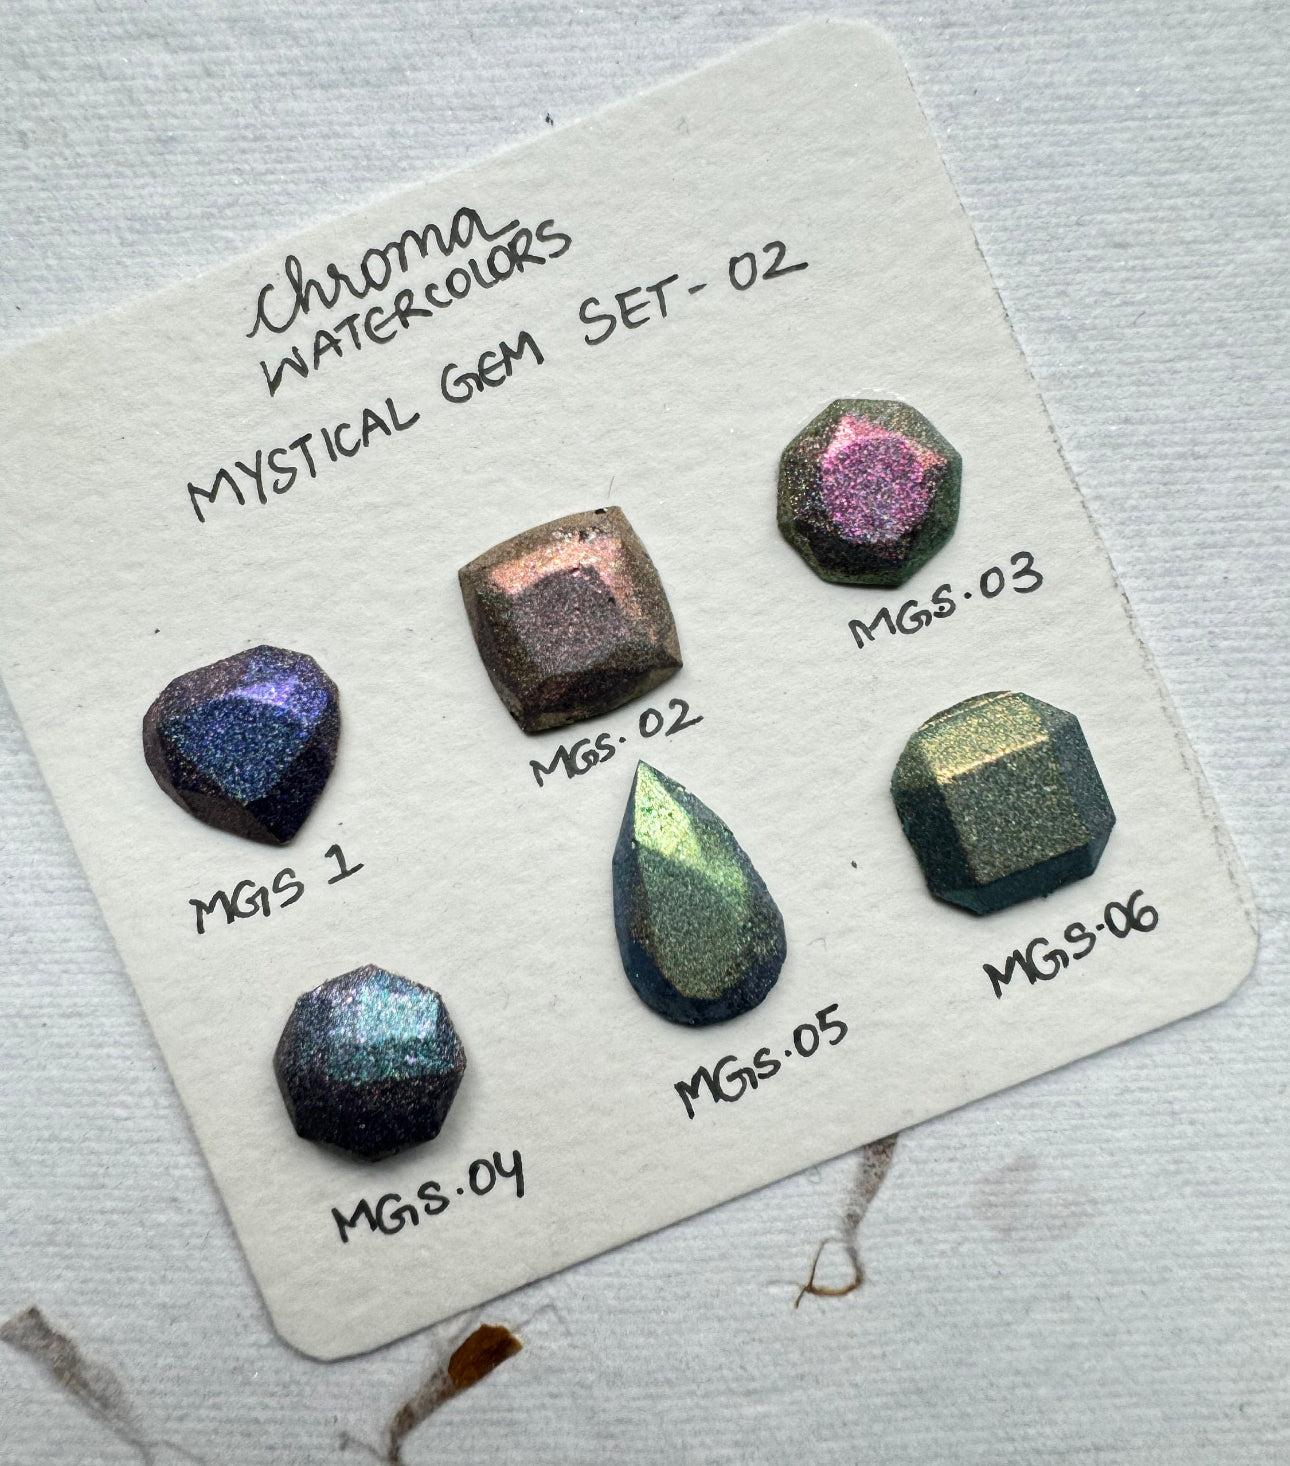 Cartilla de acuarelas artesanales, Set: "Mystical Gems 2" Chroma Watercolors